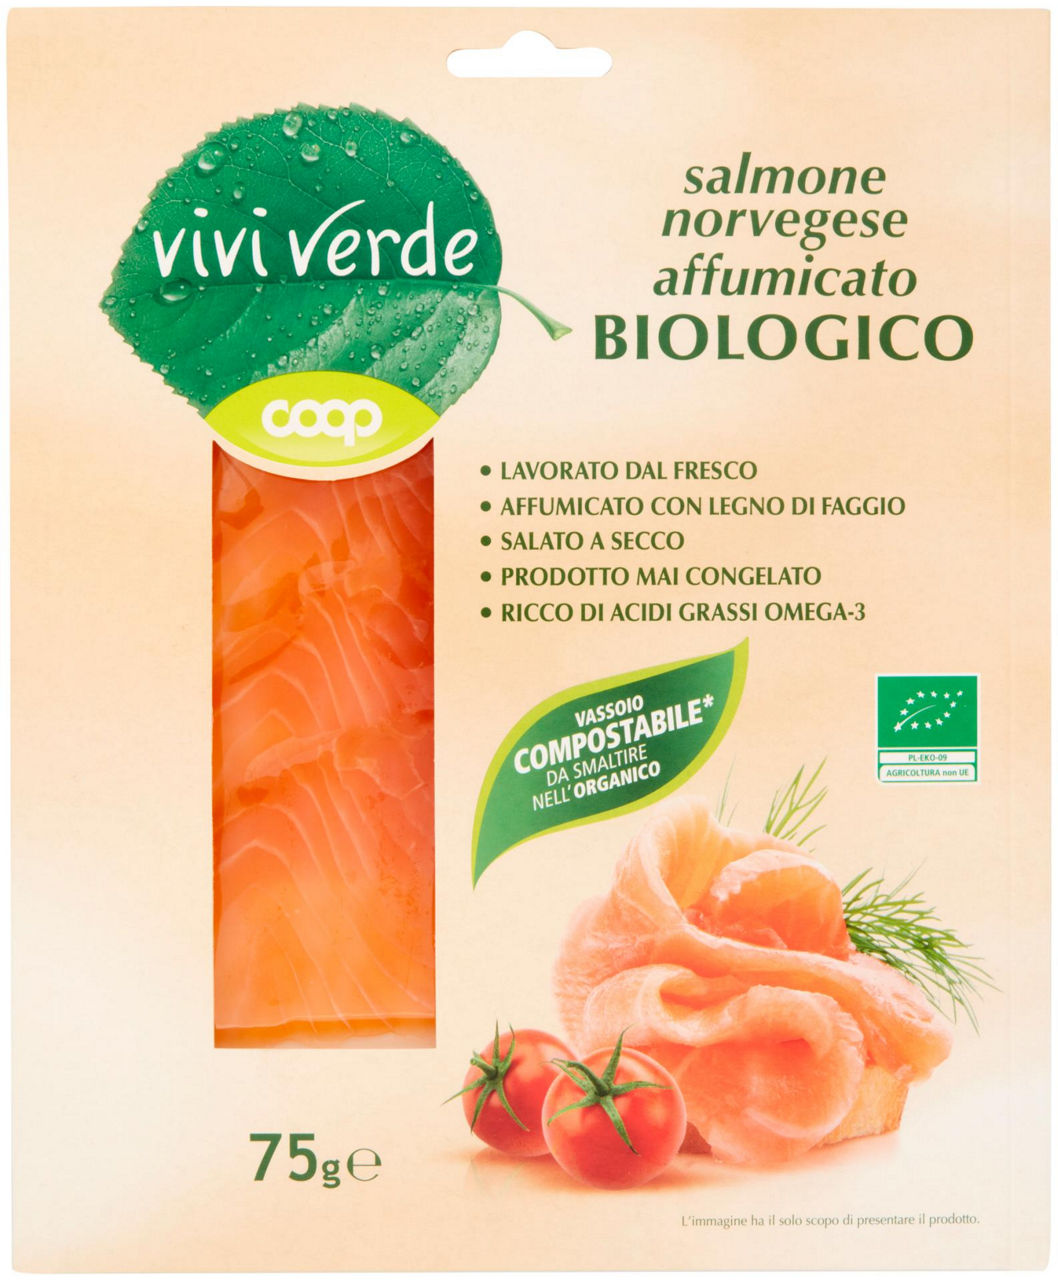 salmone norvegese affumicato Biologico Vivi Verde 75 g - 0